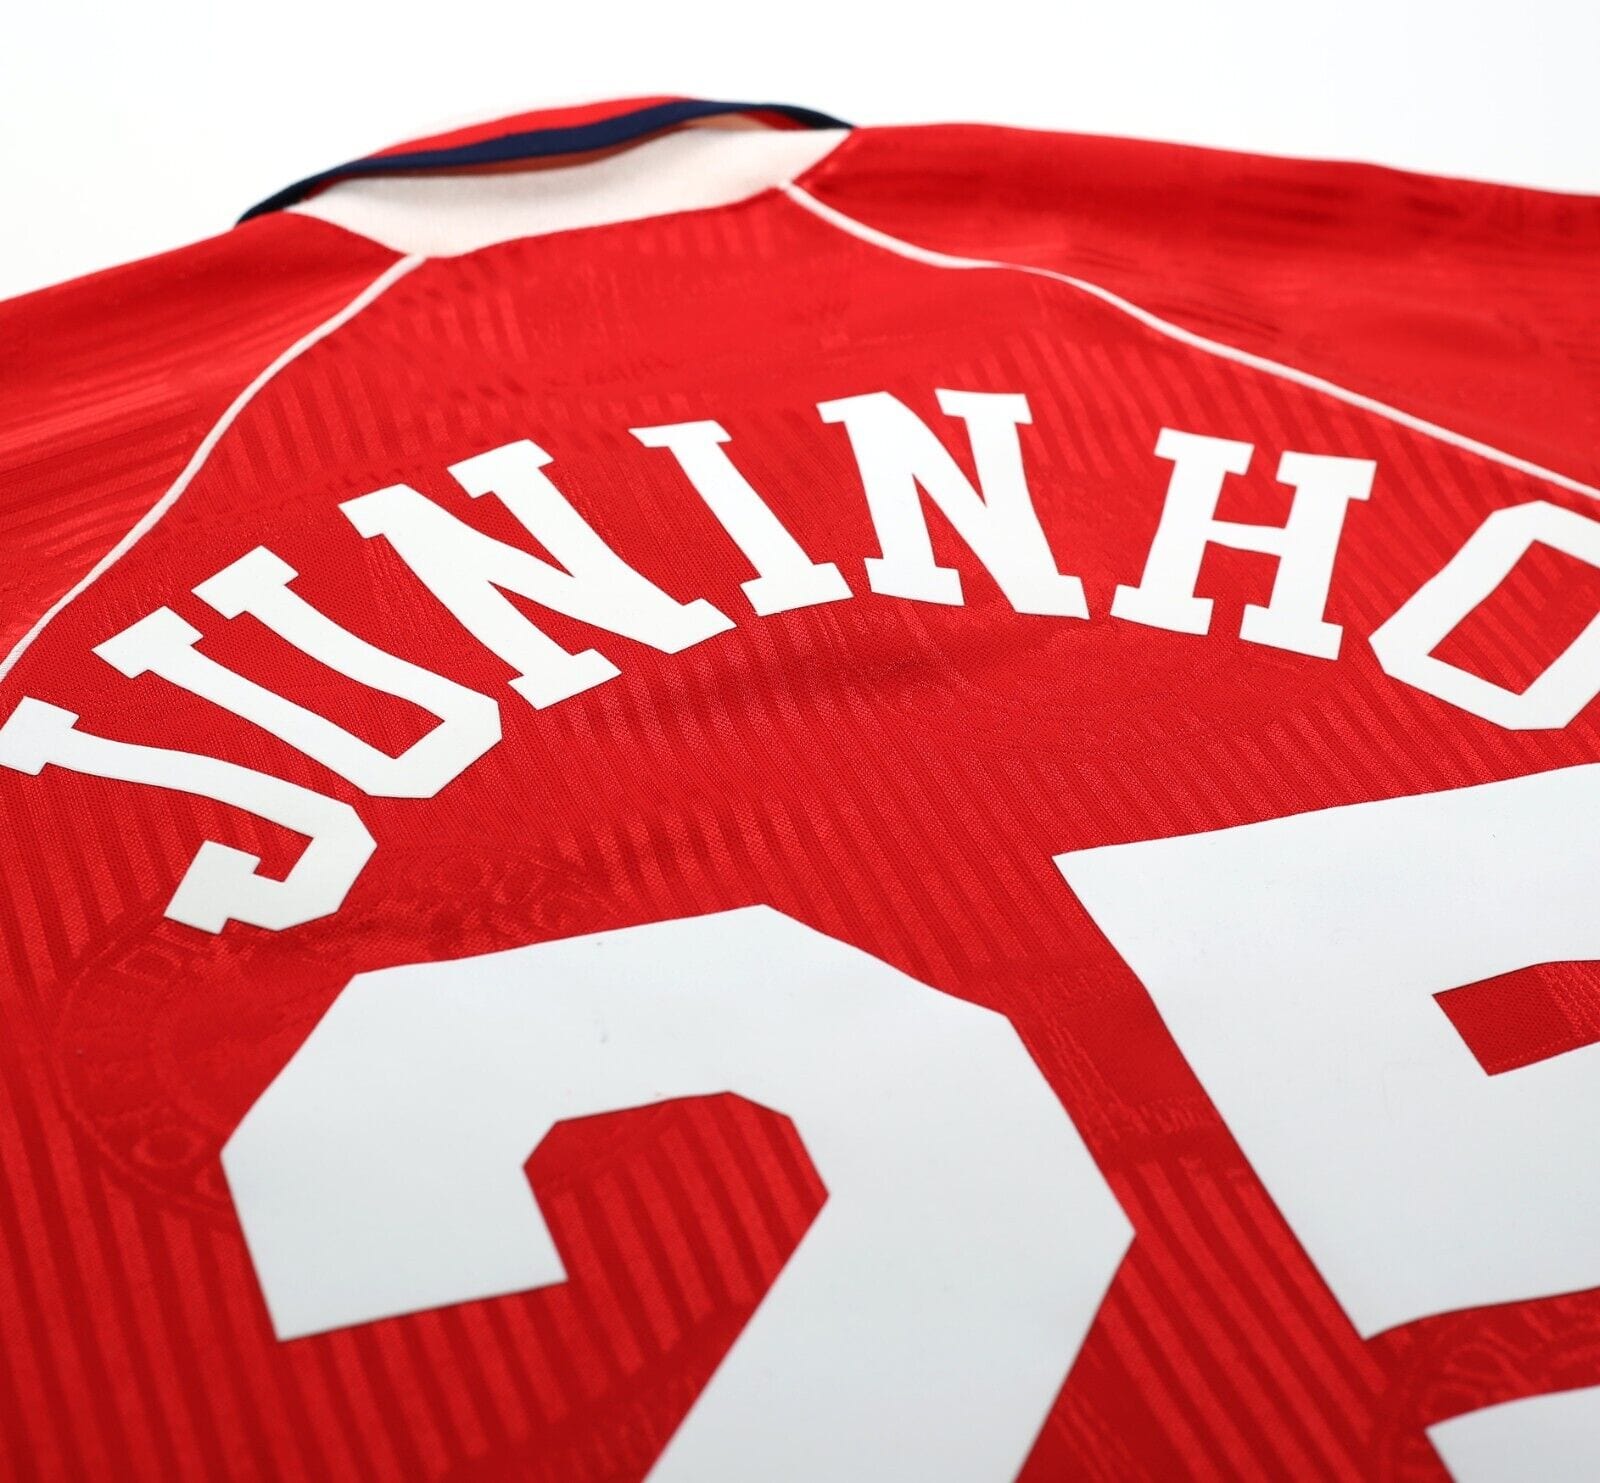 1995/96 JUNINHO #25 Middlesbrough Vintage errea Home Football Shirt (L)